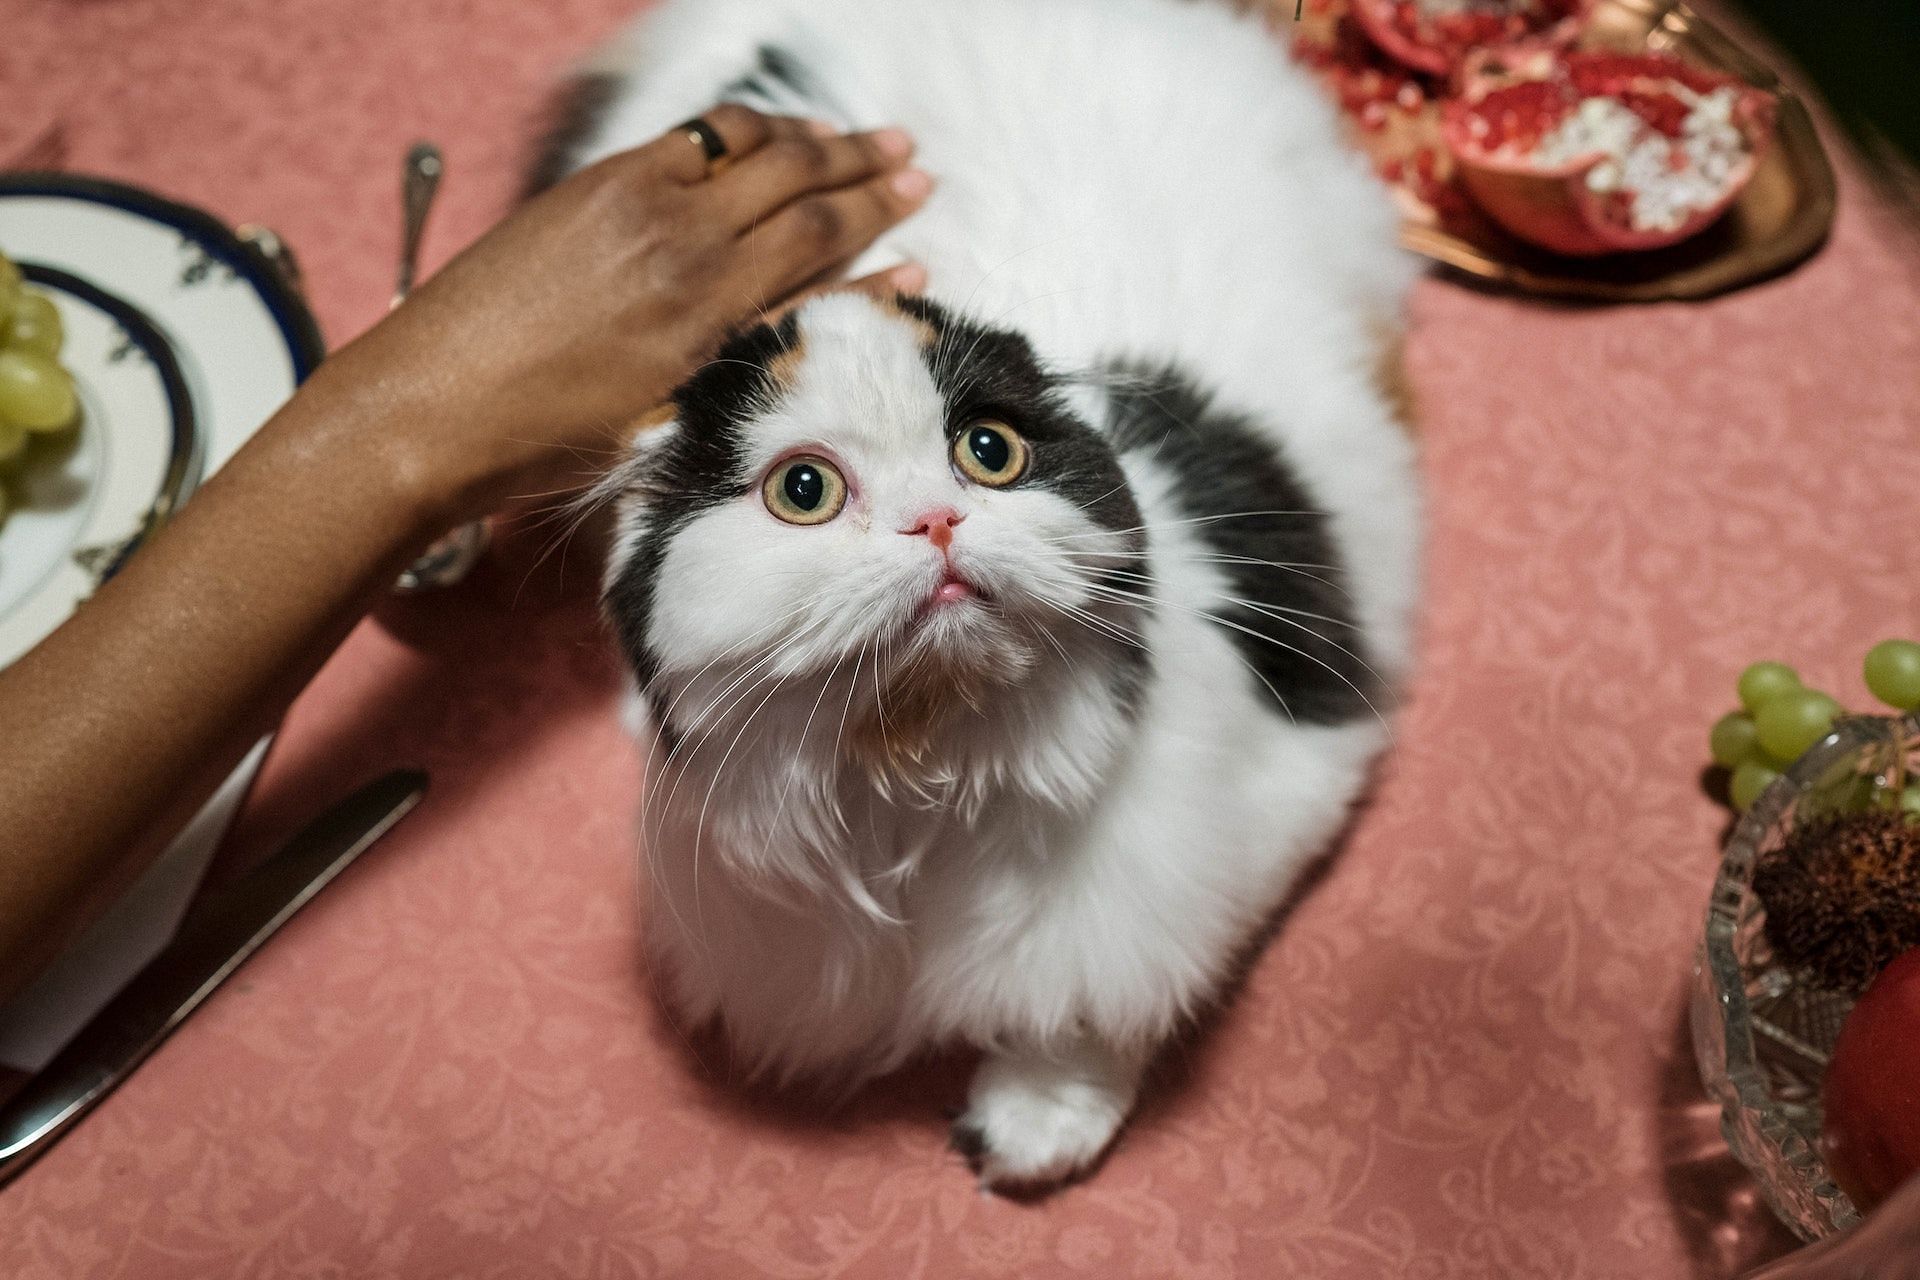 Cat scratch fever is a bacterial infection. (Photo via Pexels/cottonbro studio)